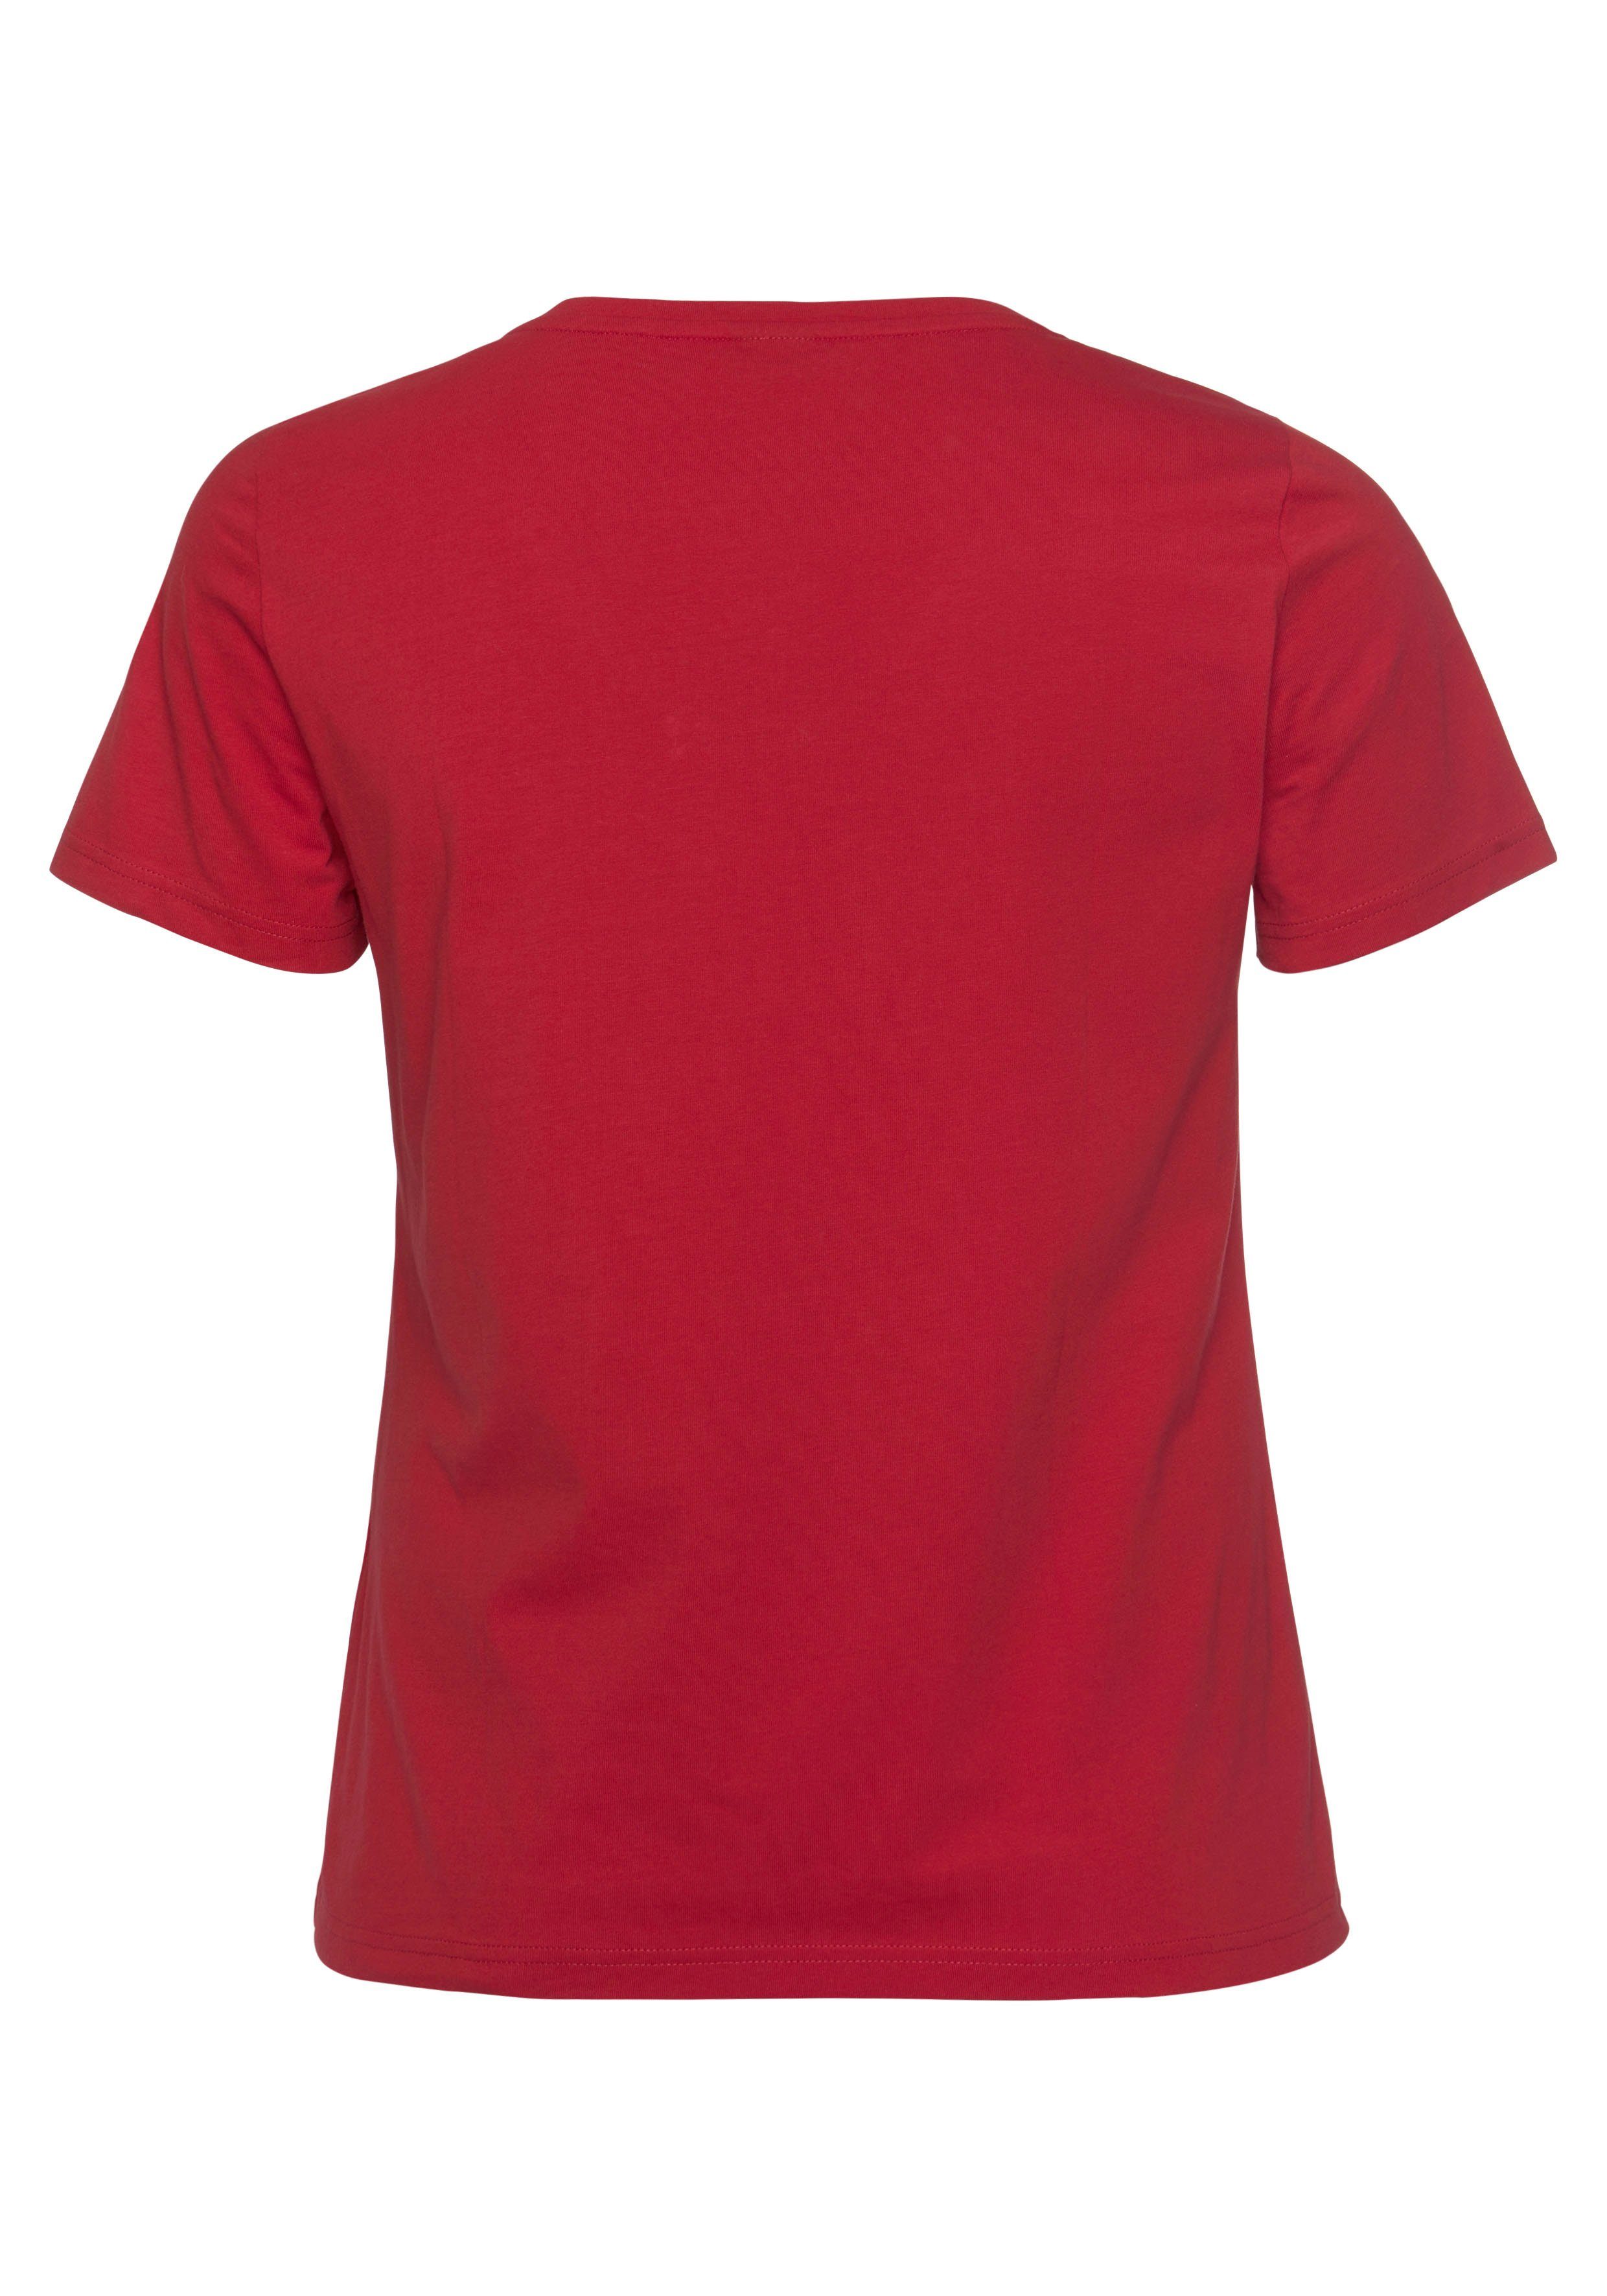 H.I.S marine, Größen Große weiß, rot T-Shirt 3er-Pack) (Spar-Set, Essential-Basics